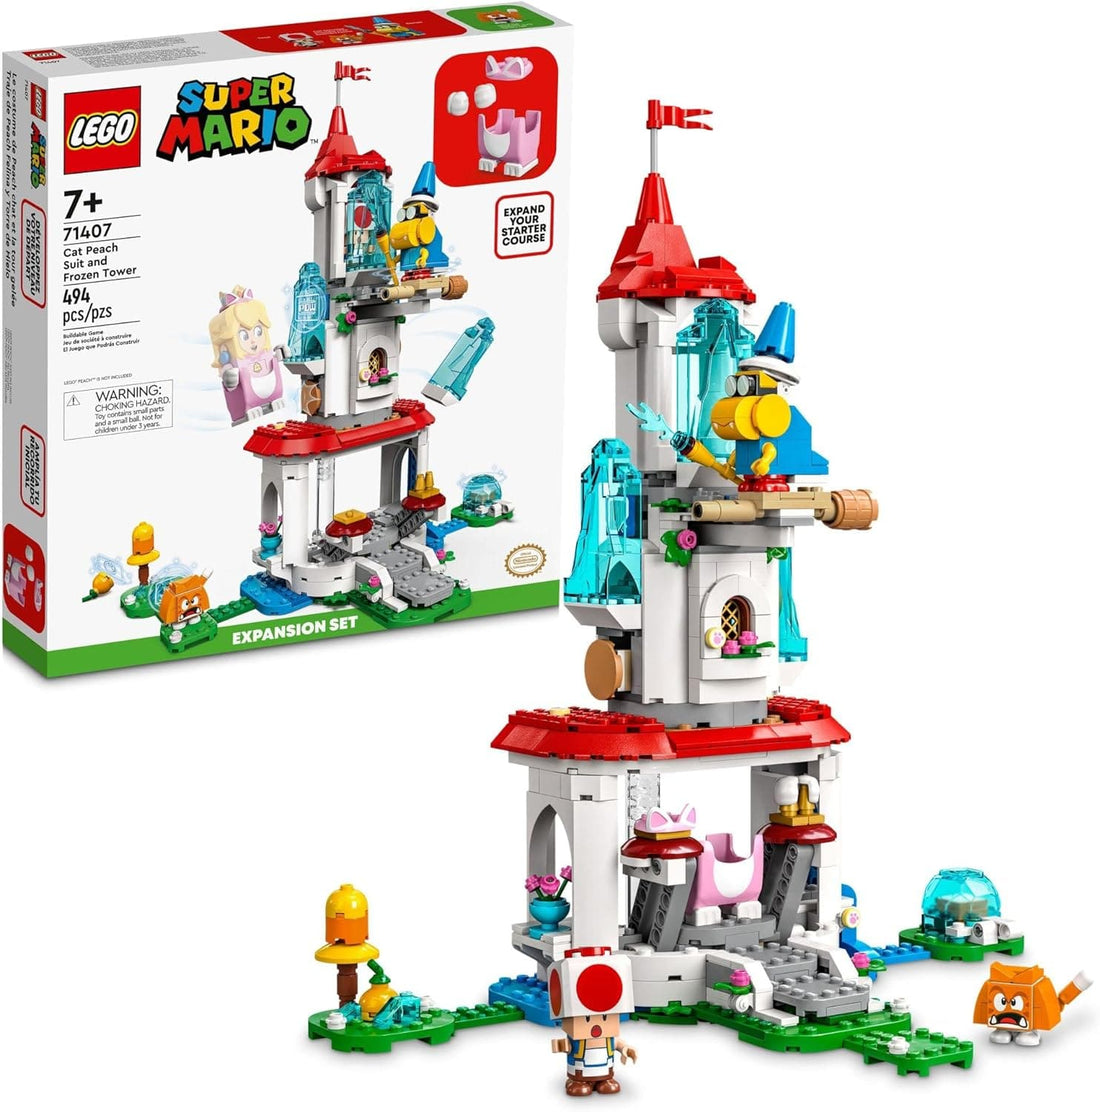 LEGO Super Mario Cat Peach Suit and Frozen Tower Expansion Set - best price from Maltashopper.com 71407